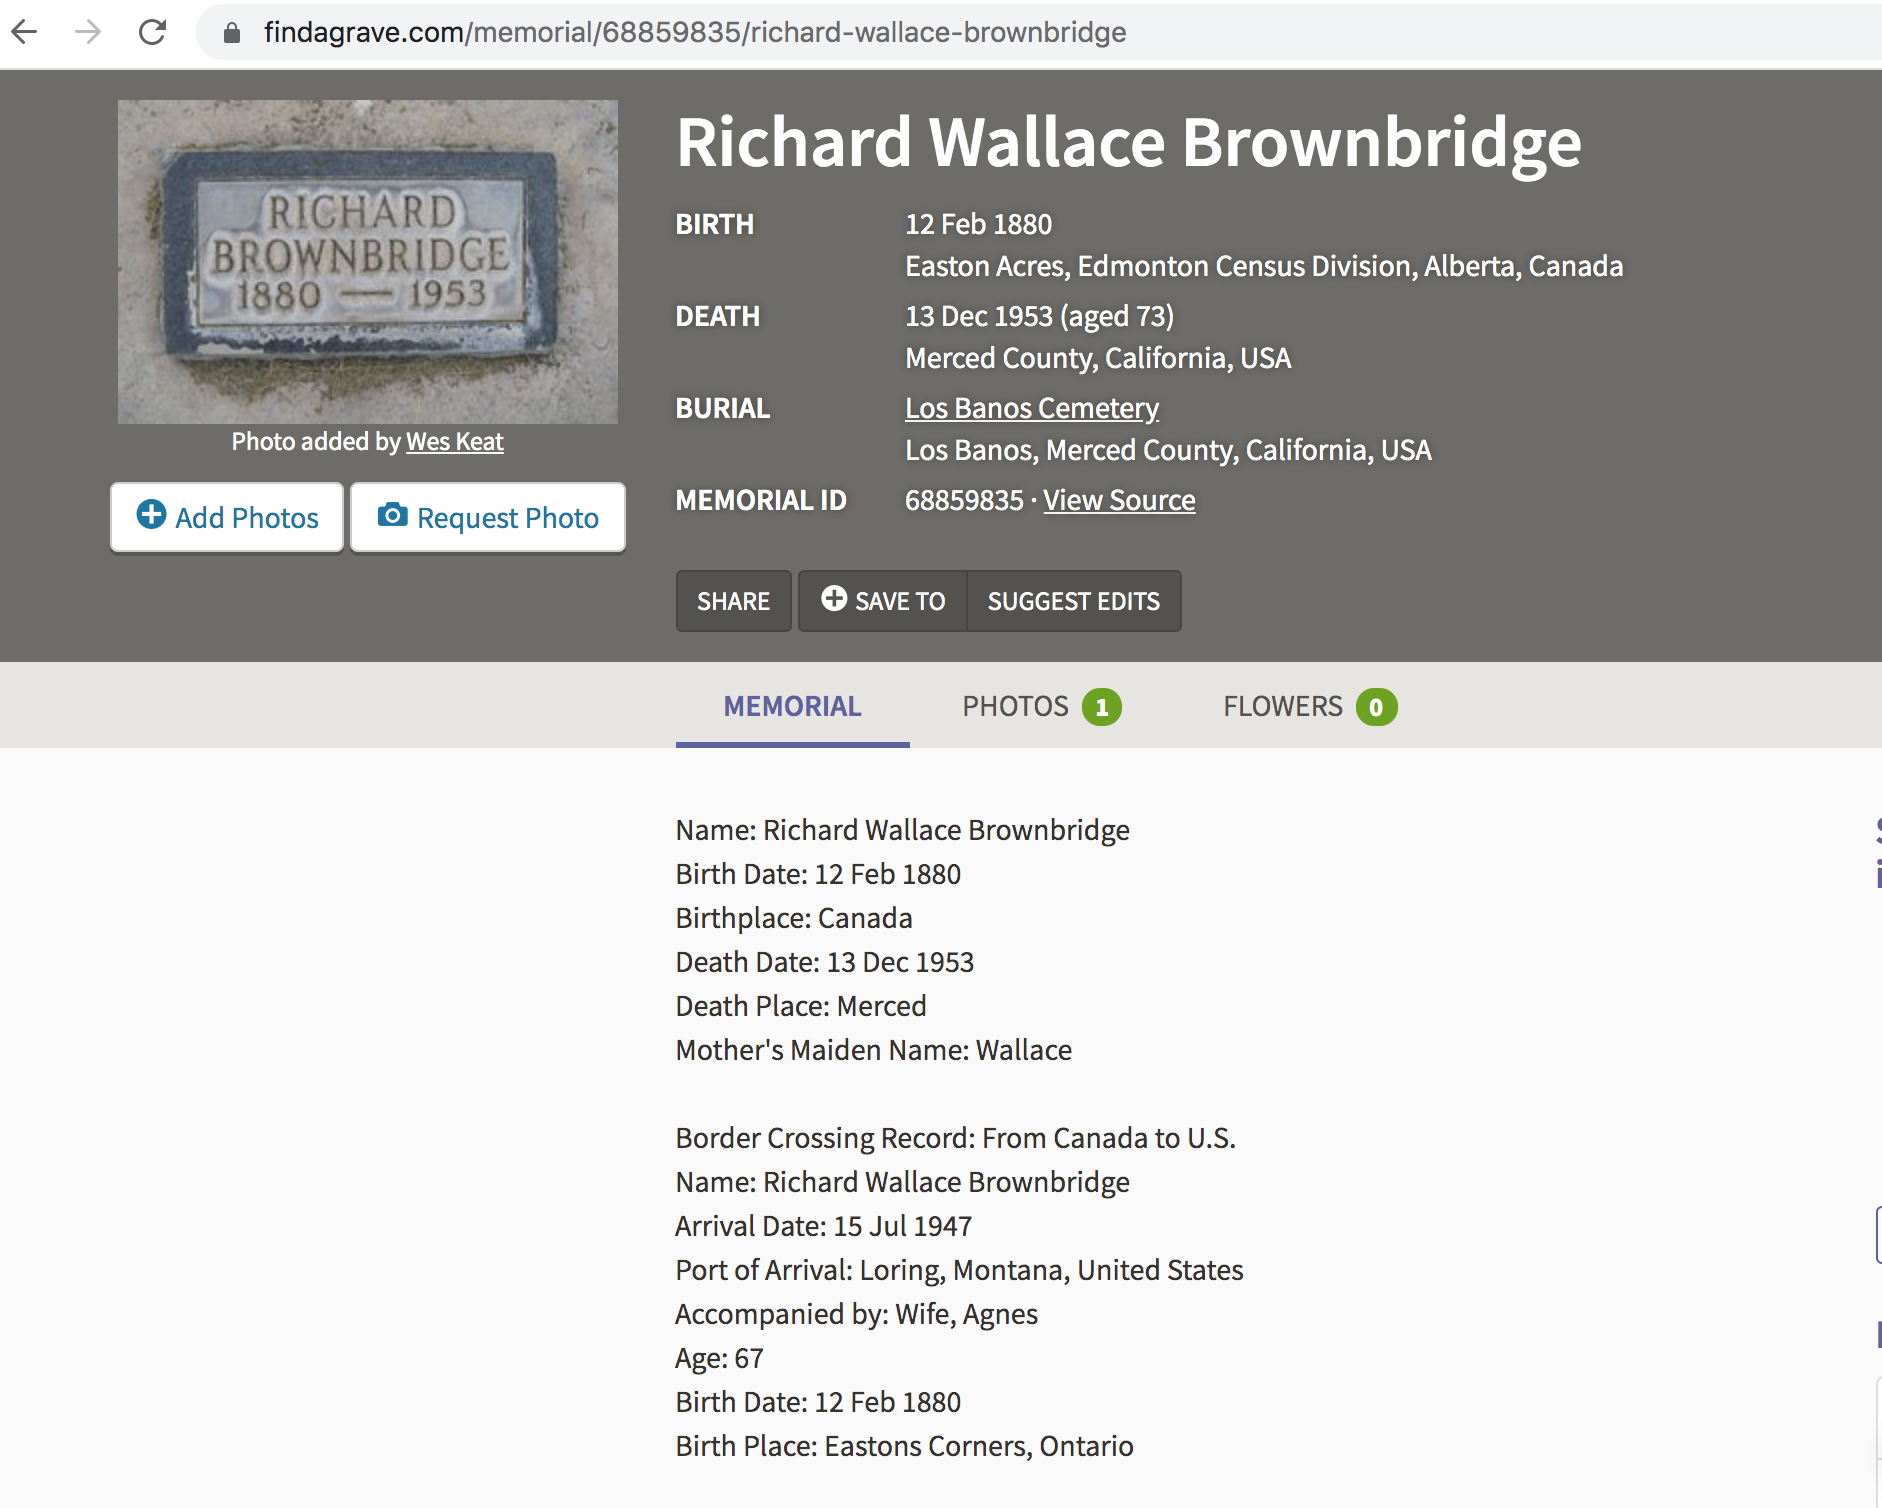 Richard Wallace Brownbridge